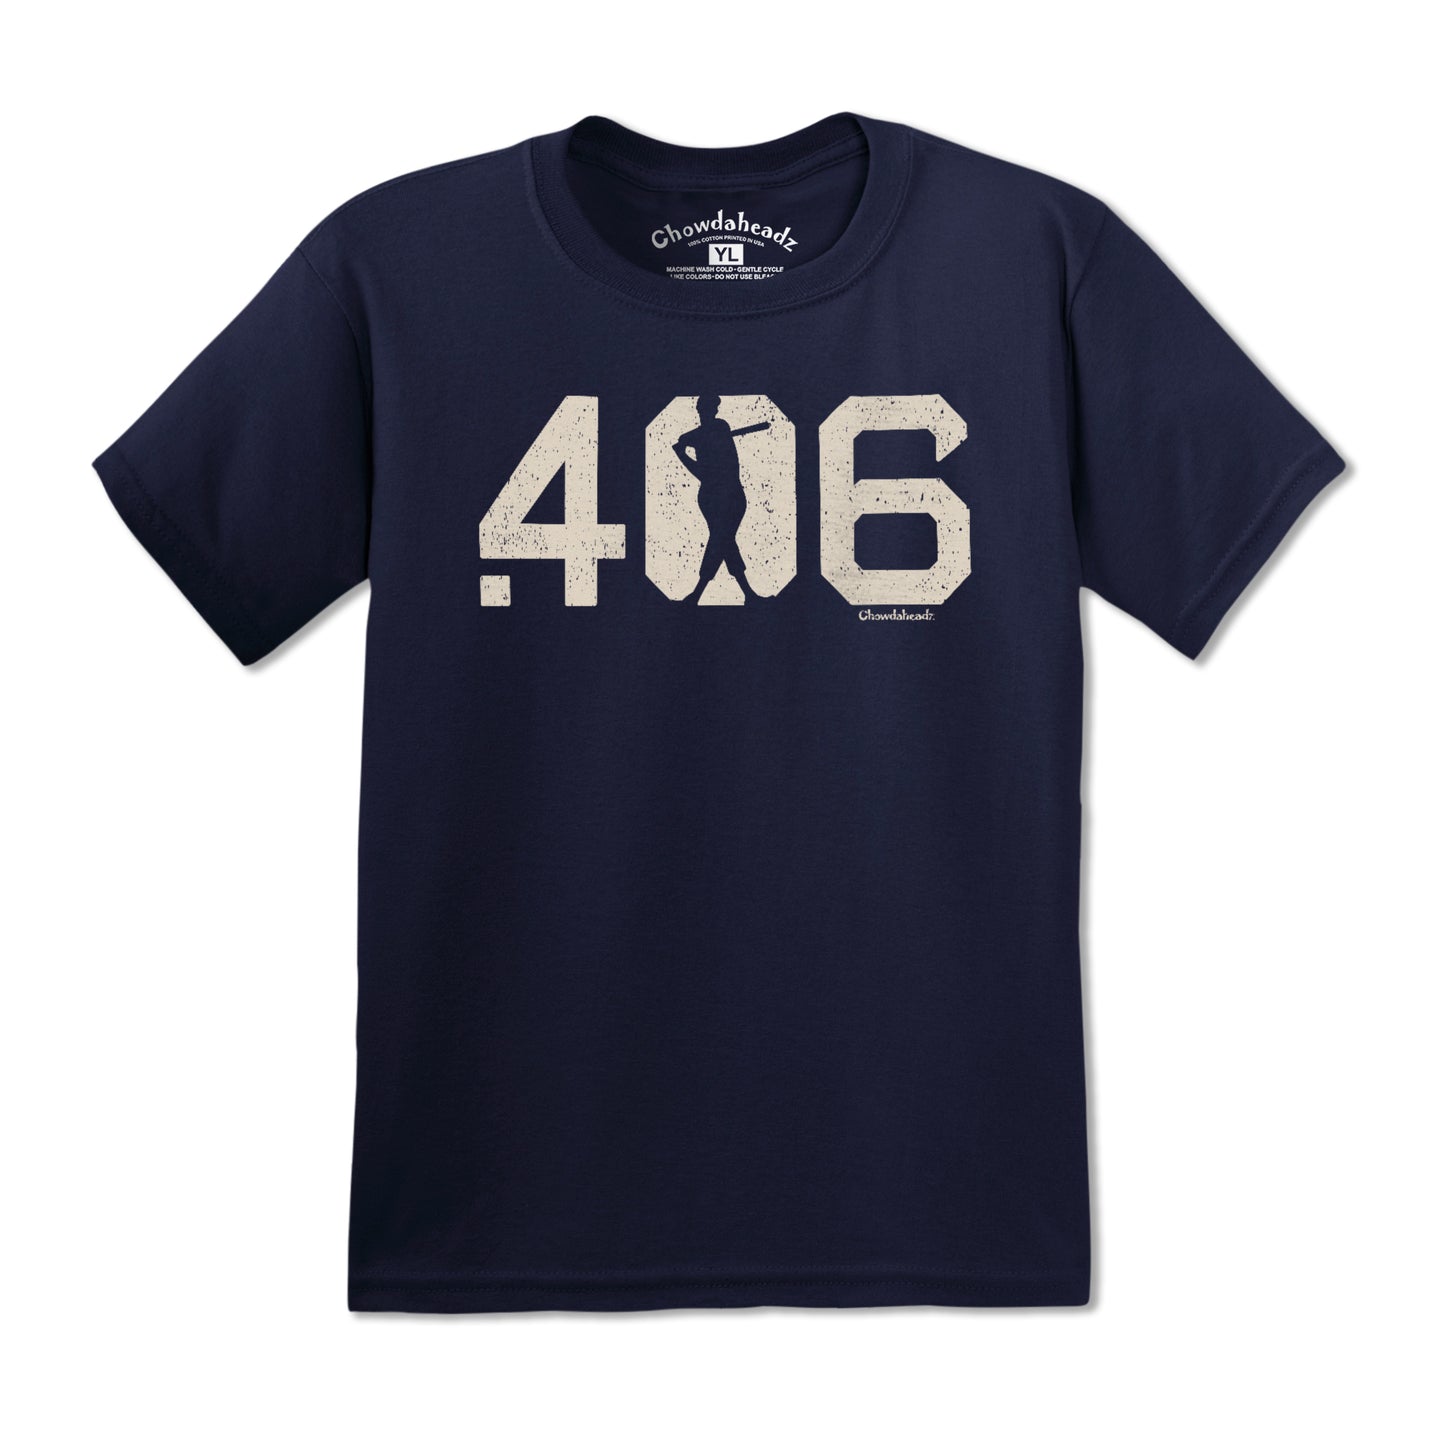 .406 Hitter Youth T-Shirt - Chowdaheadz